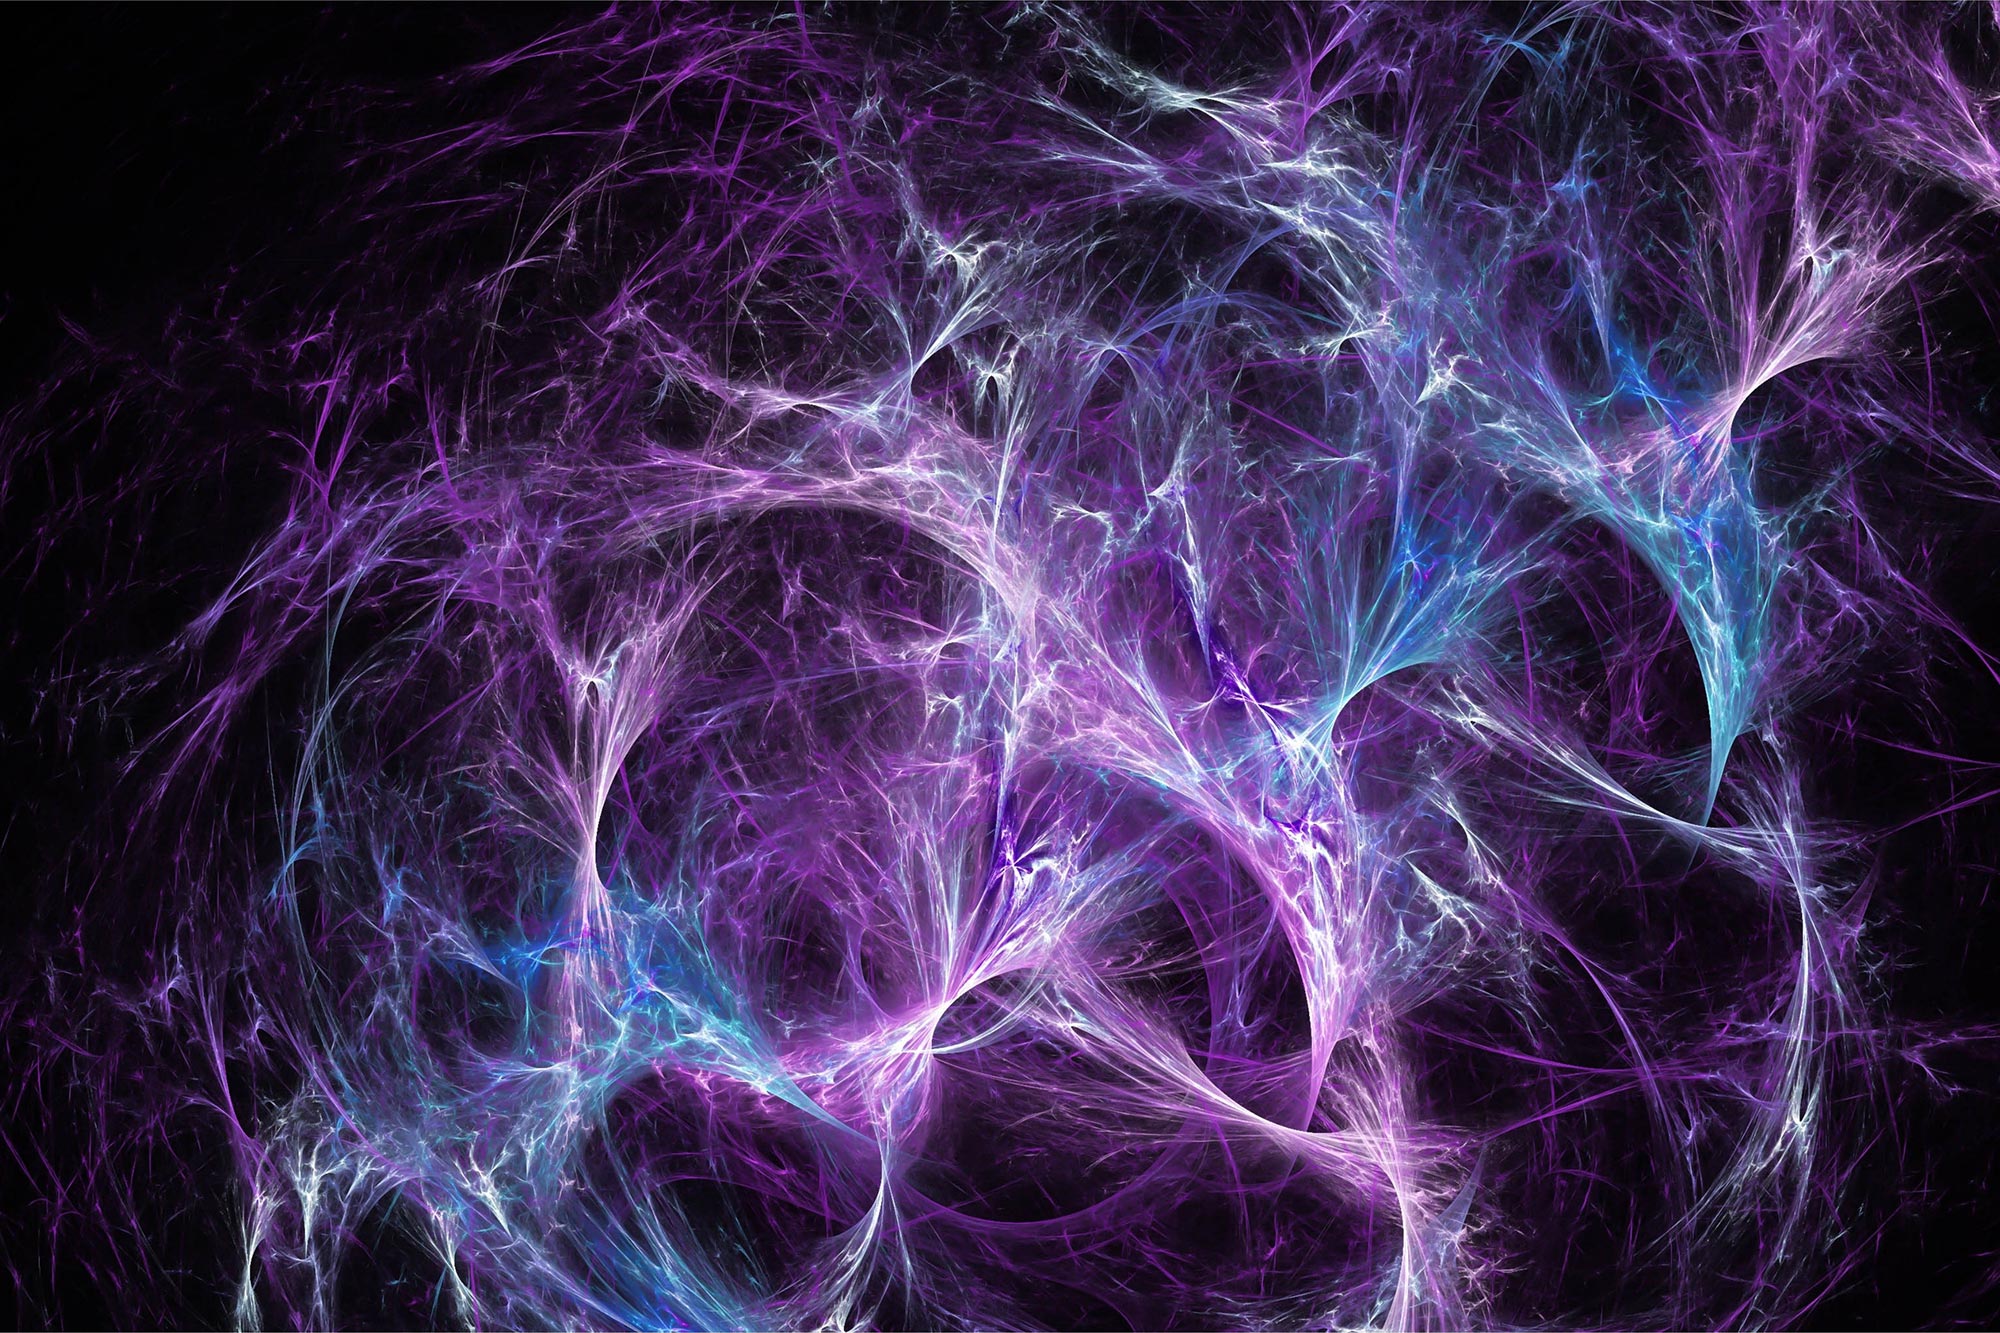 Abstract mystery of dark matter astrophysics